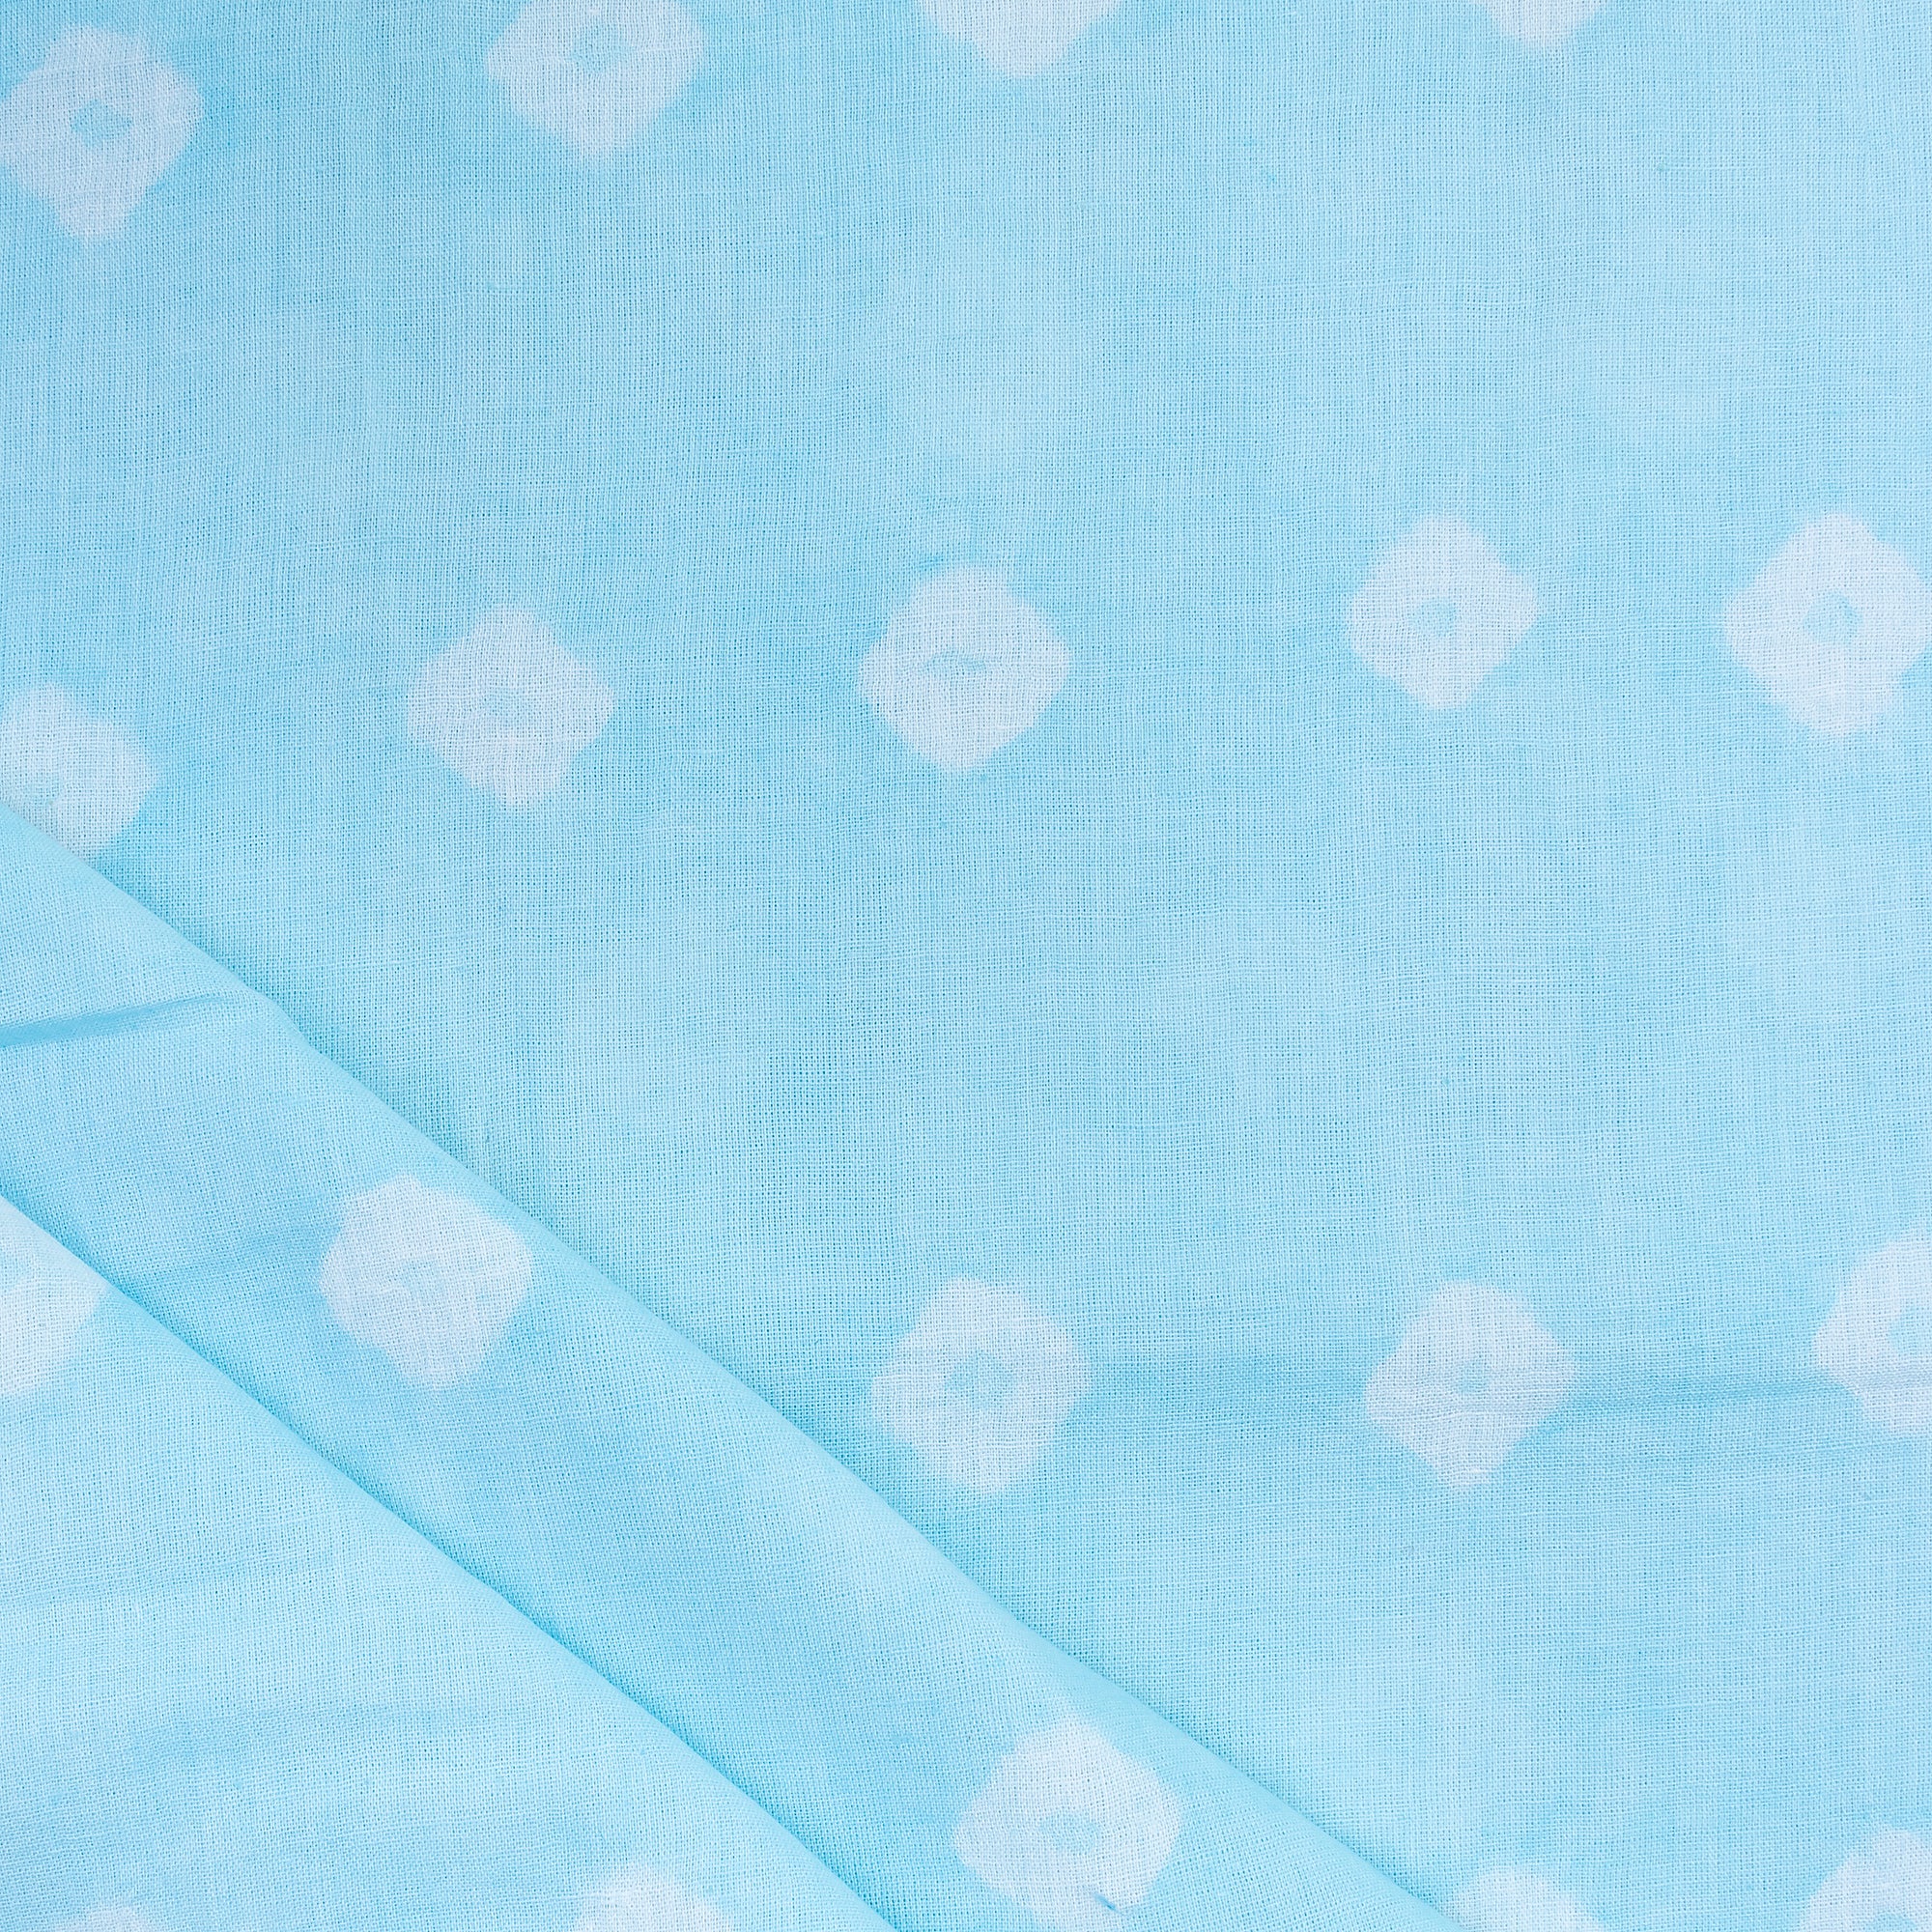 Handmade Sky Blue Tie Dye Clothing Soft Cotton Fabric